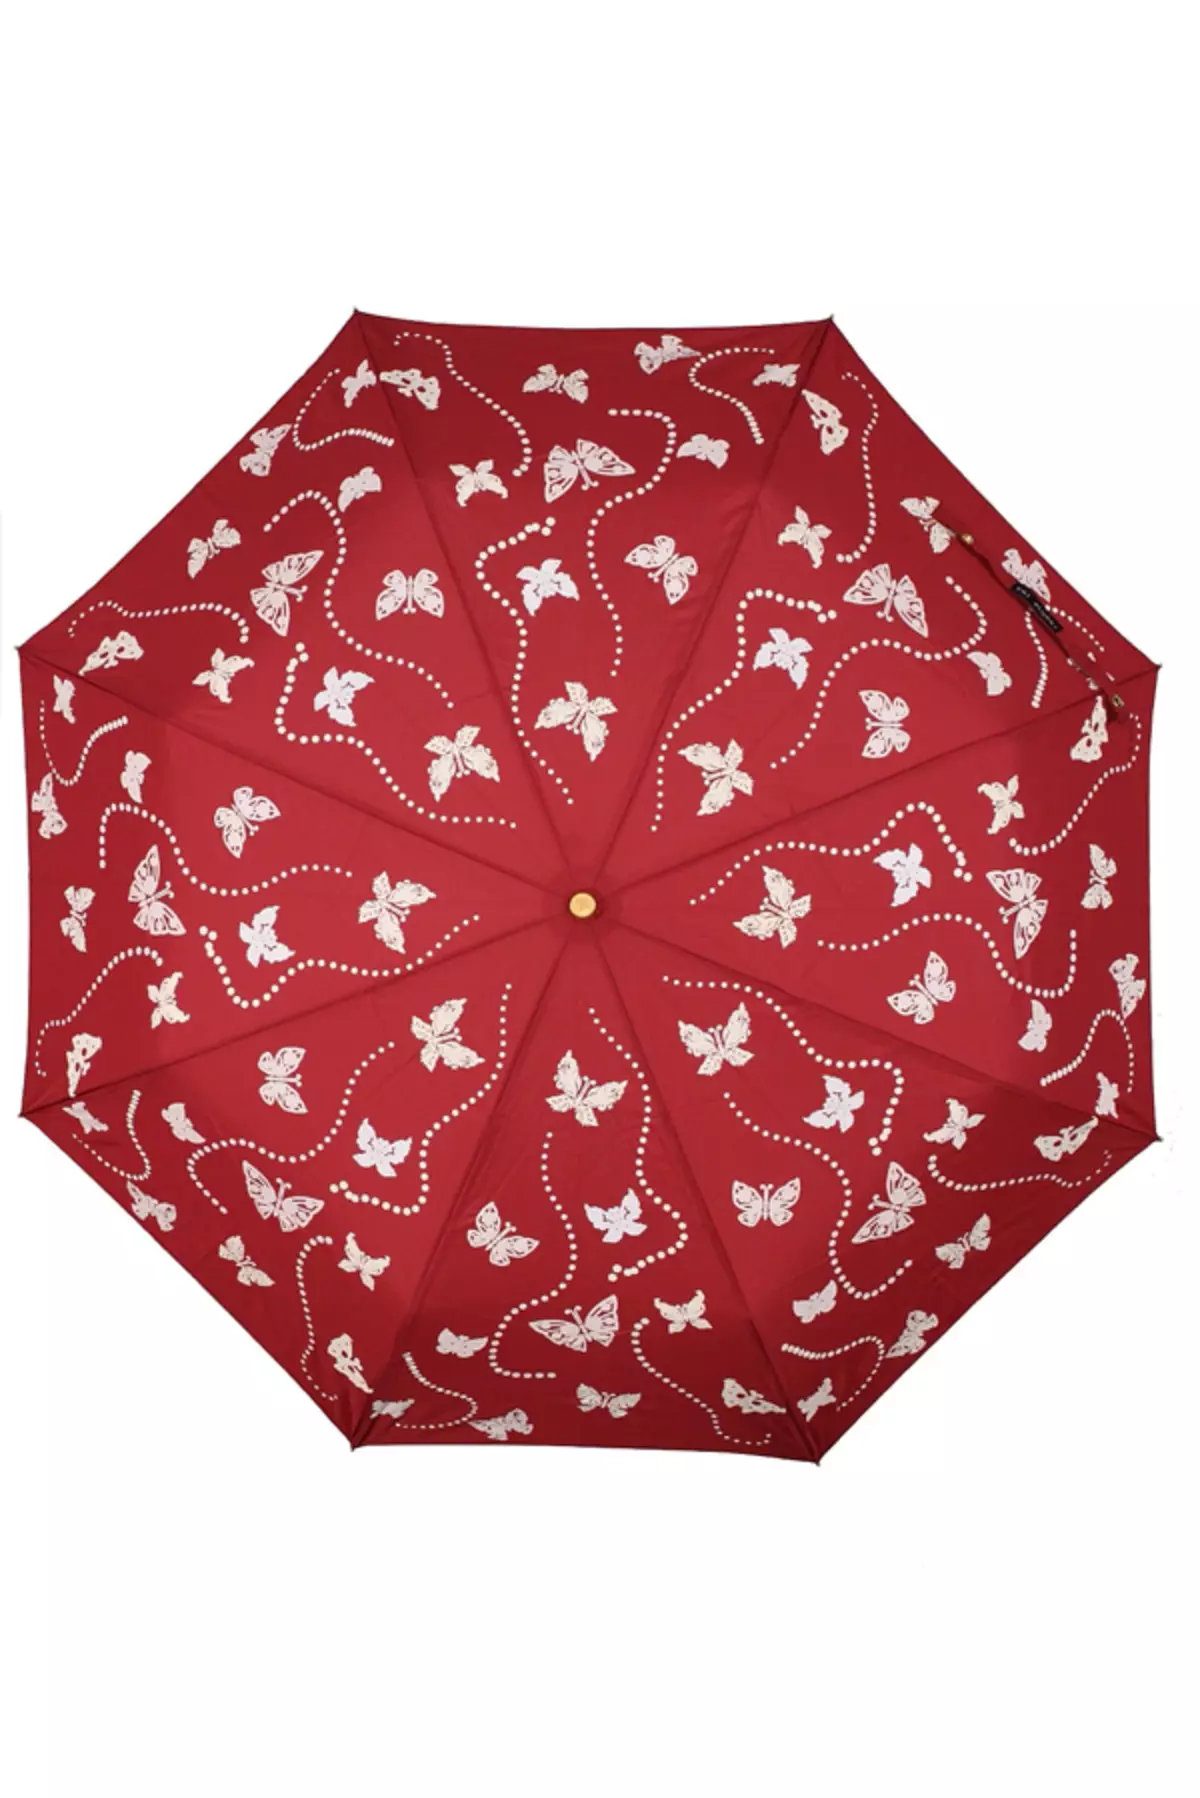 Sun Paraplu (72 foto's): vrouwelijke kant openwork paraplu-cane 15238_57